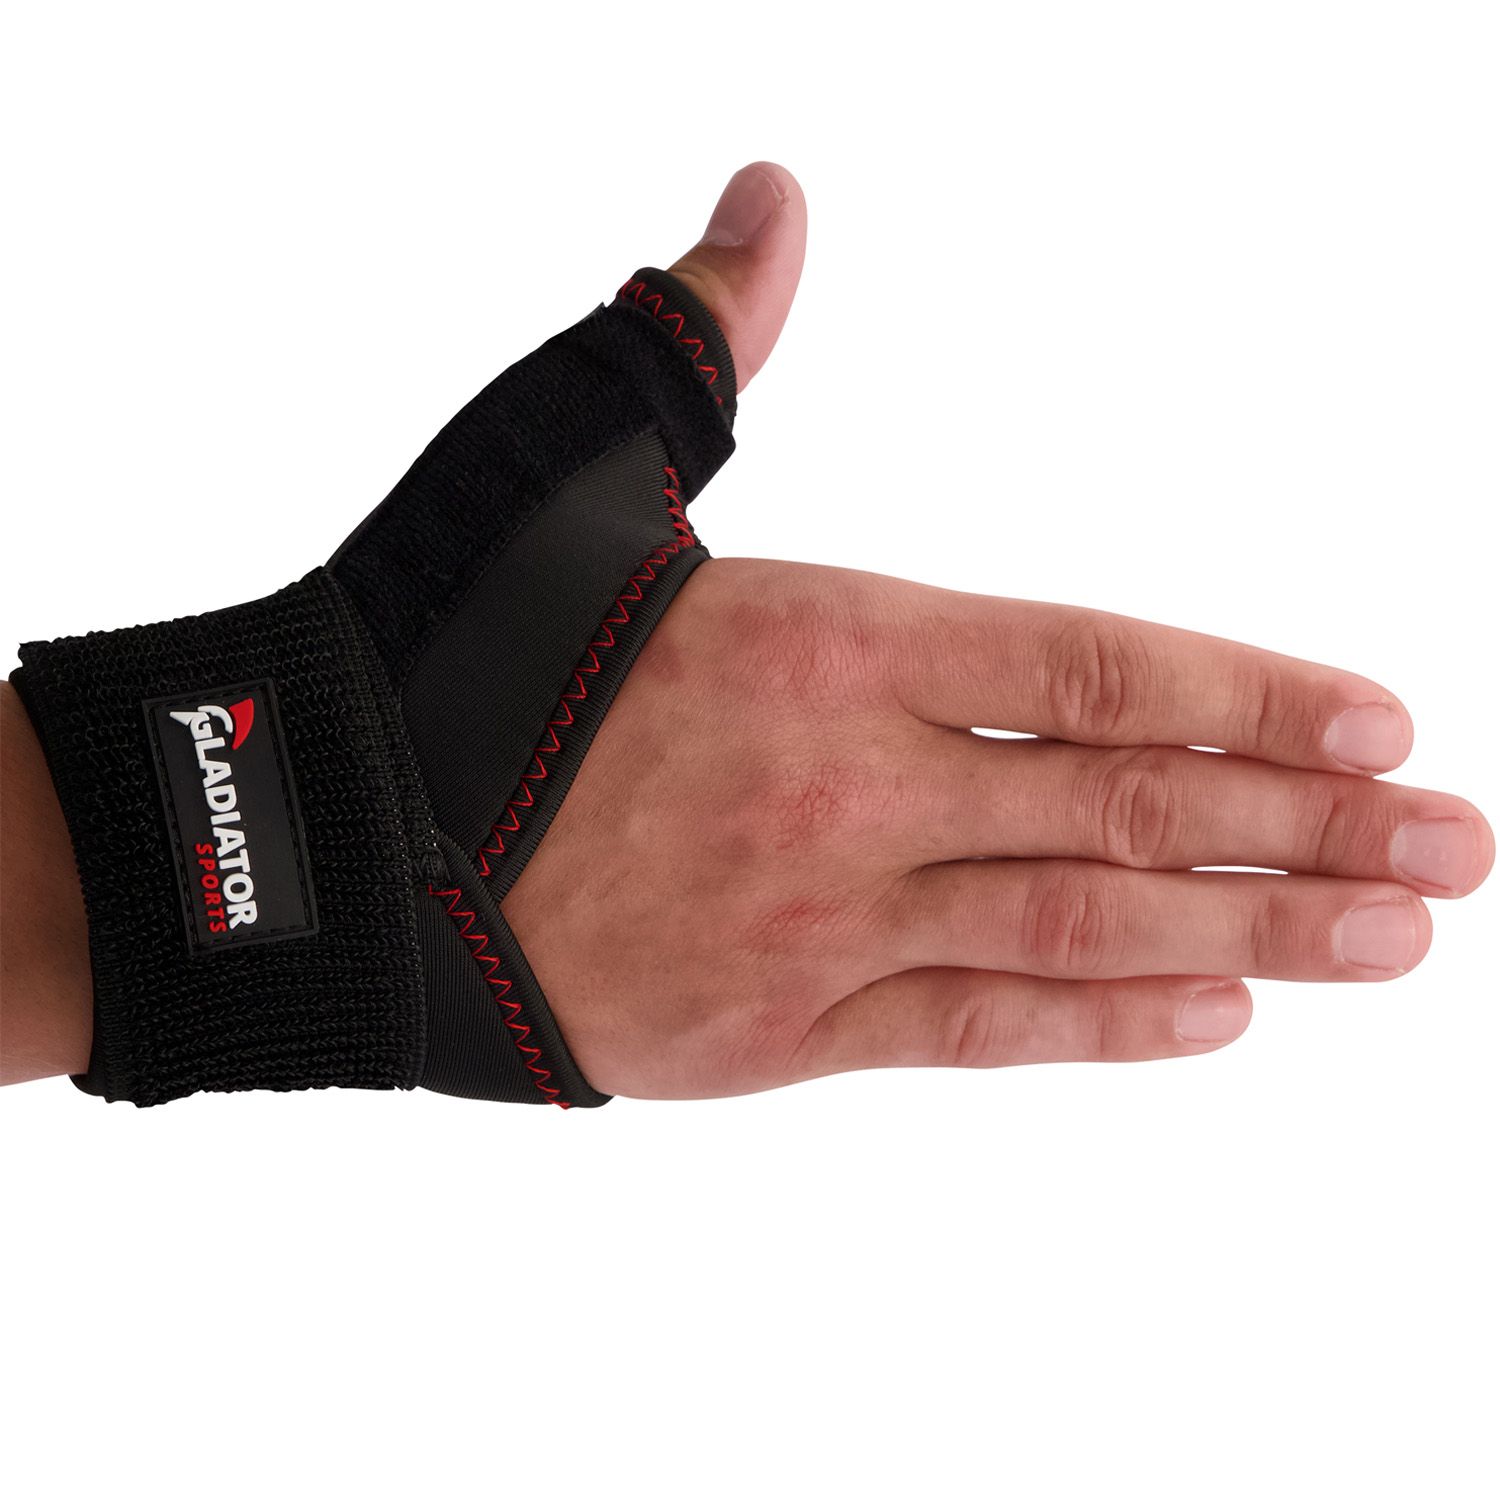 gladiator sports thumb wrist support